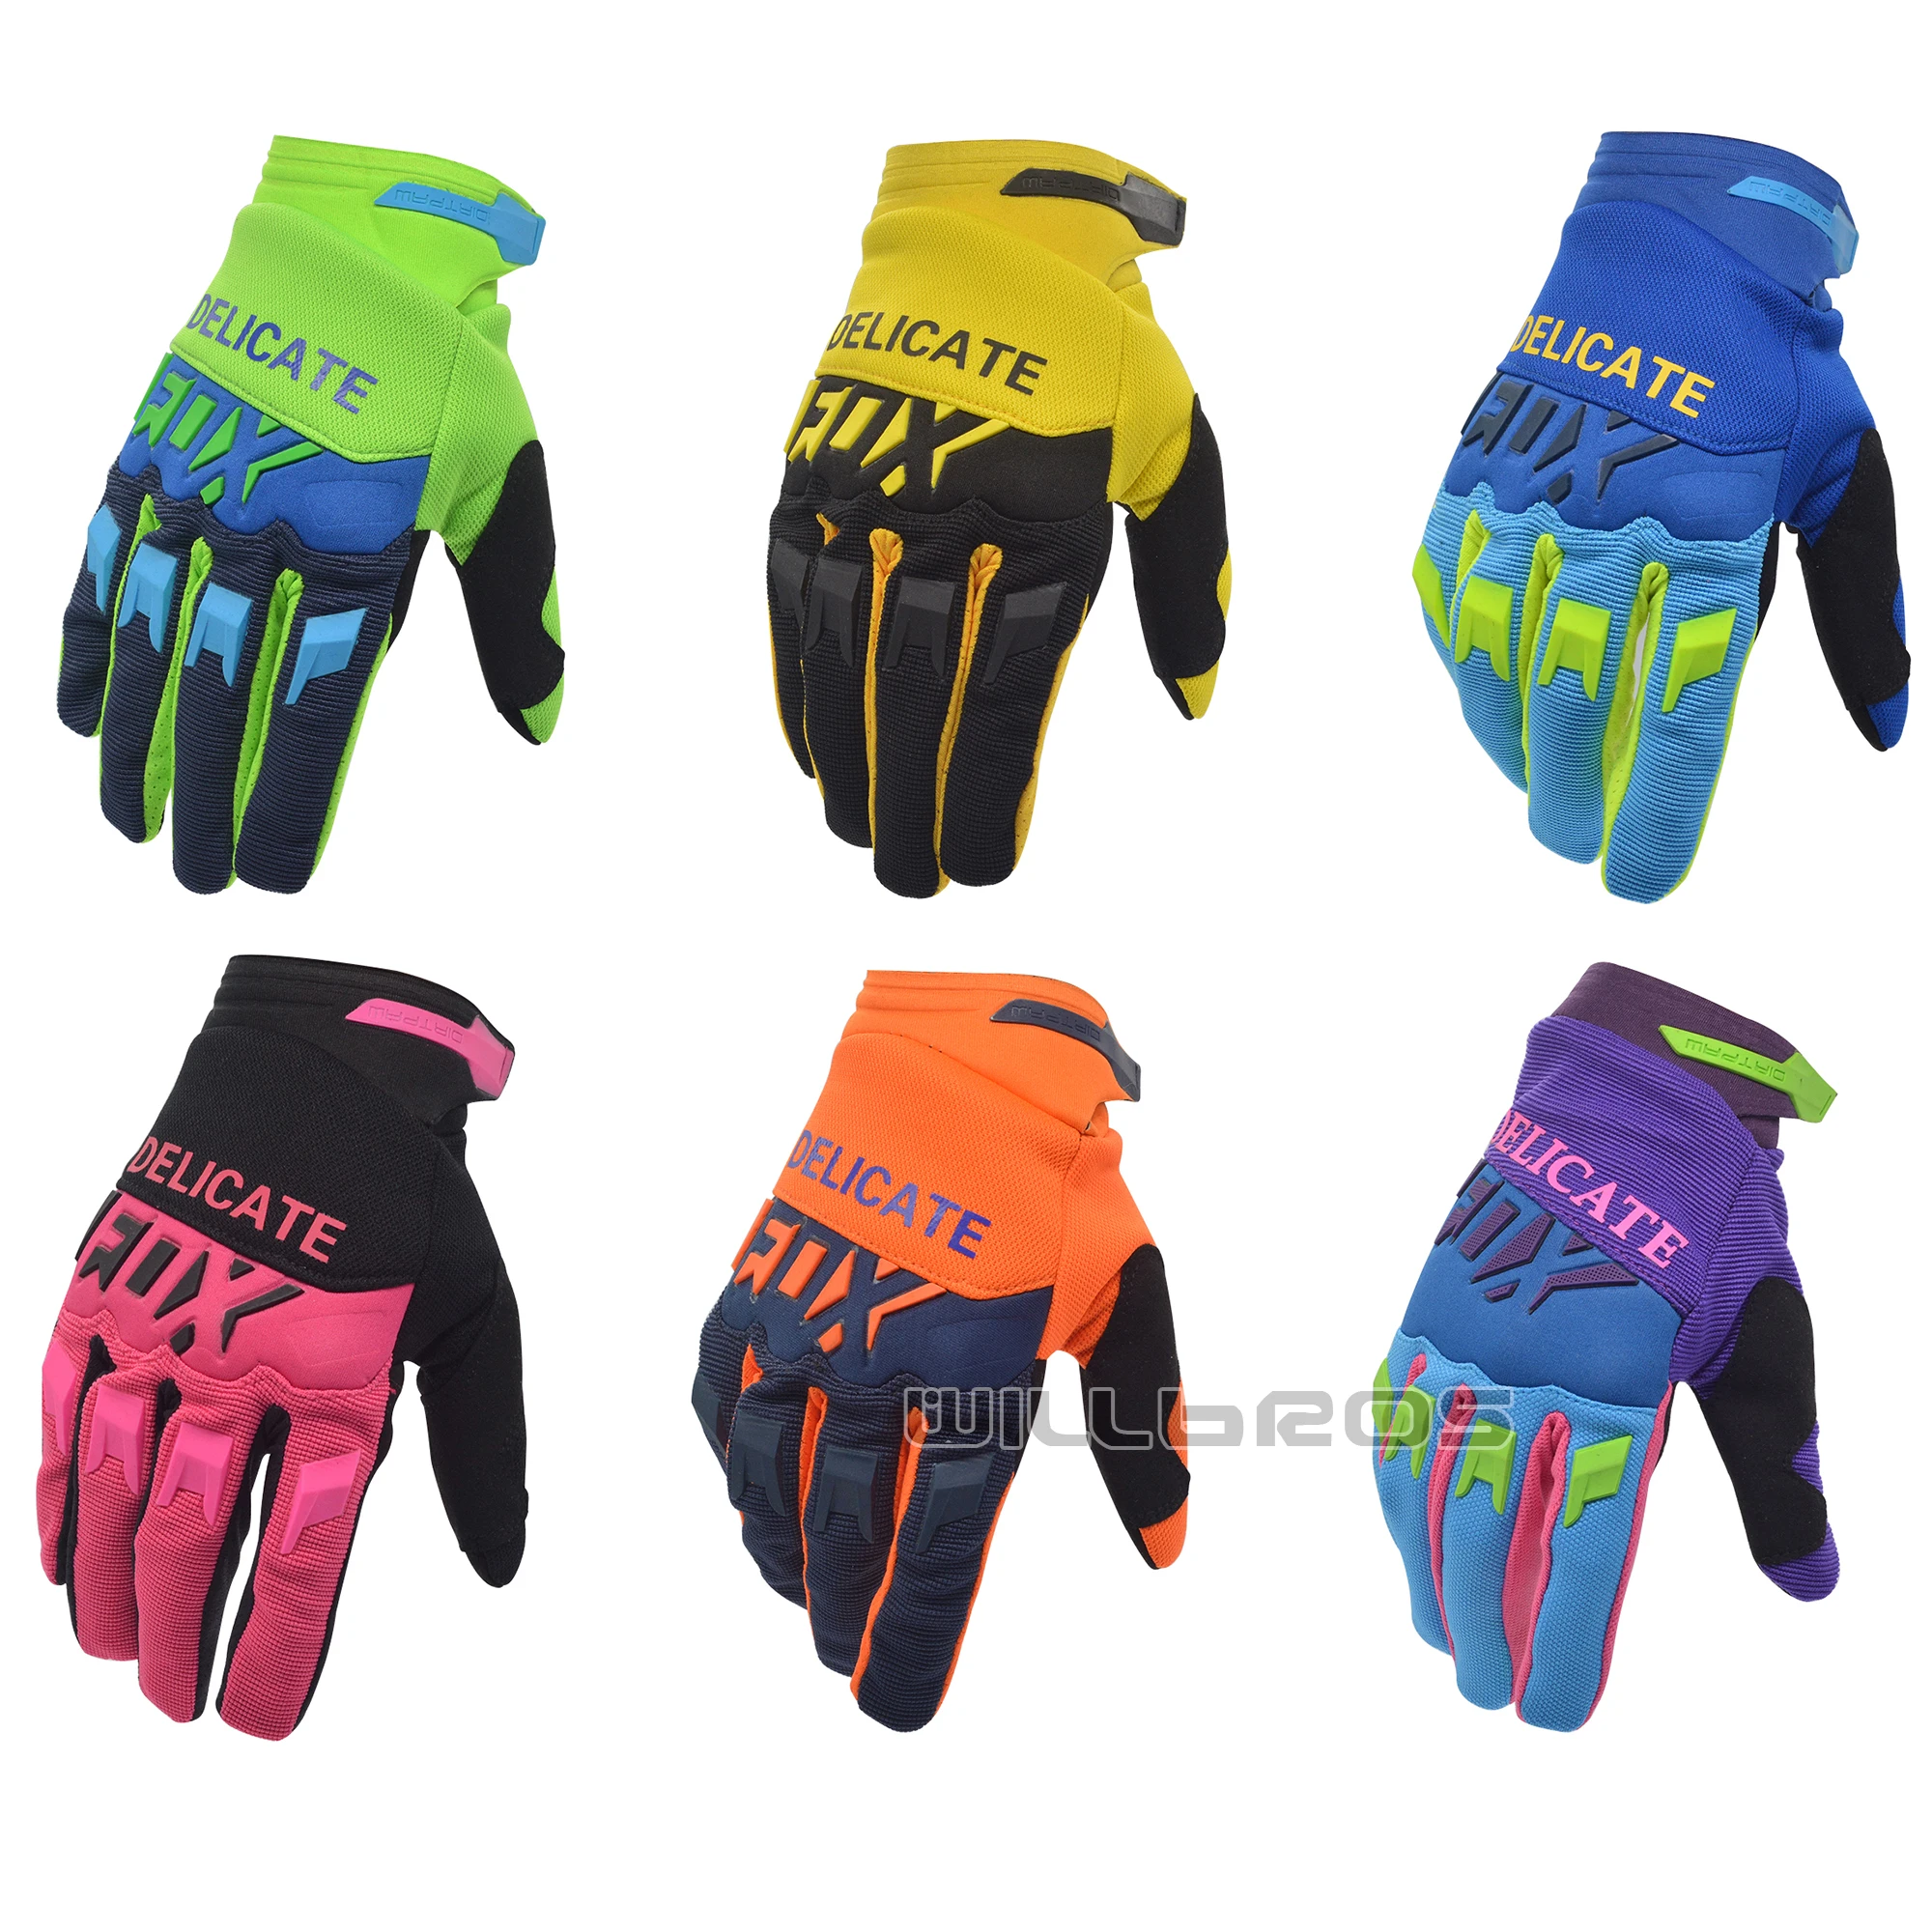 

Delicate Fox Motocross Downhill Bike Enduro MX Glove Air Mesh Offroad Cycling Race Gloves For Men Woman Unisex